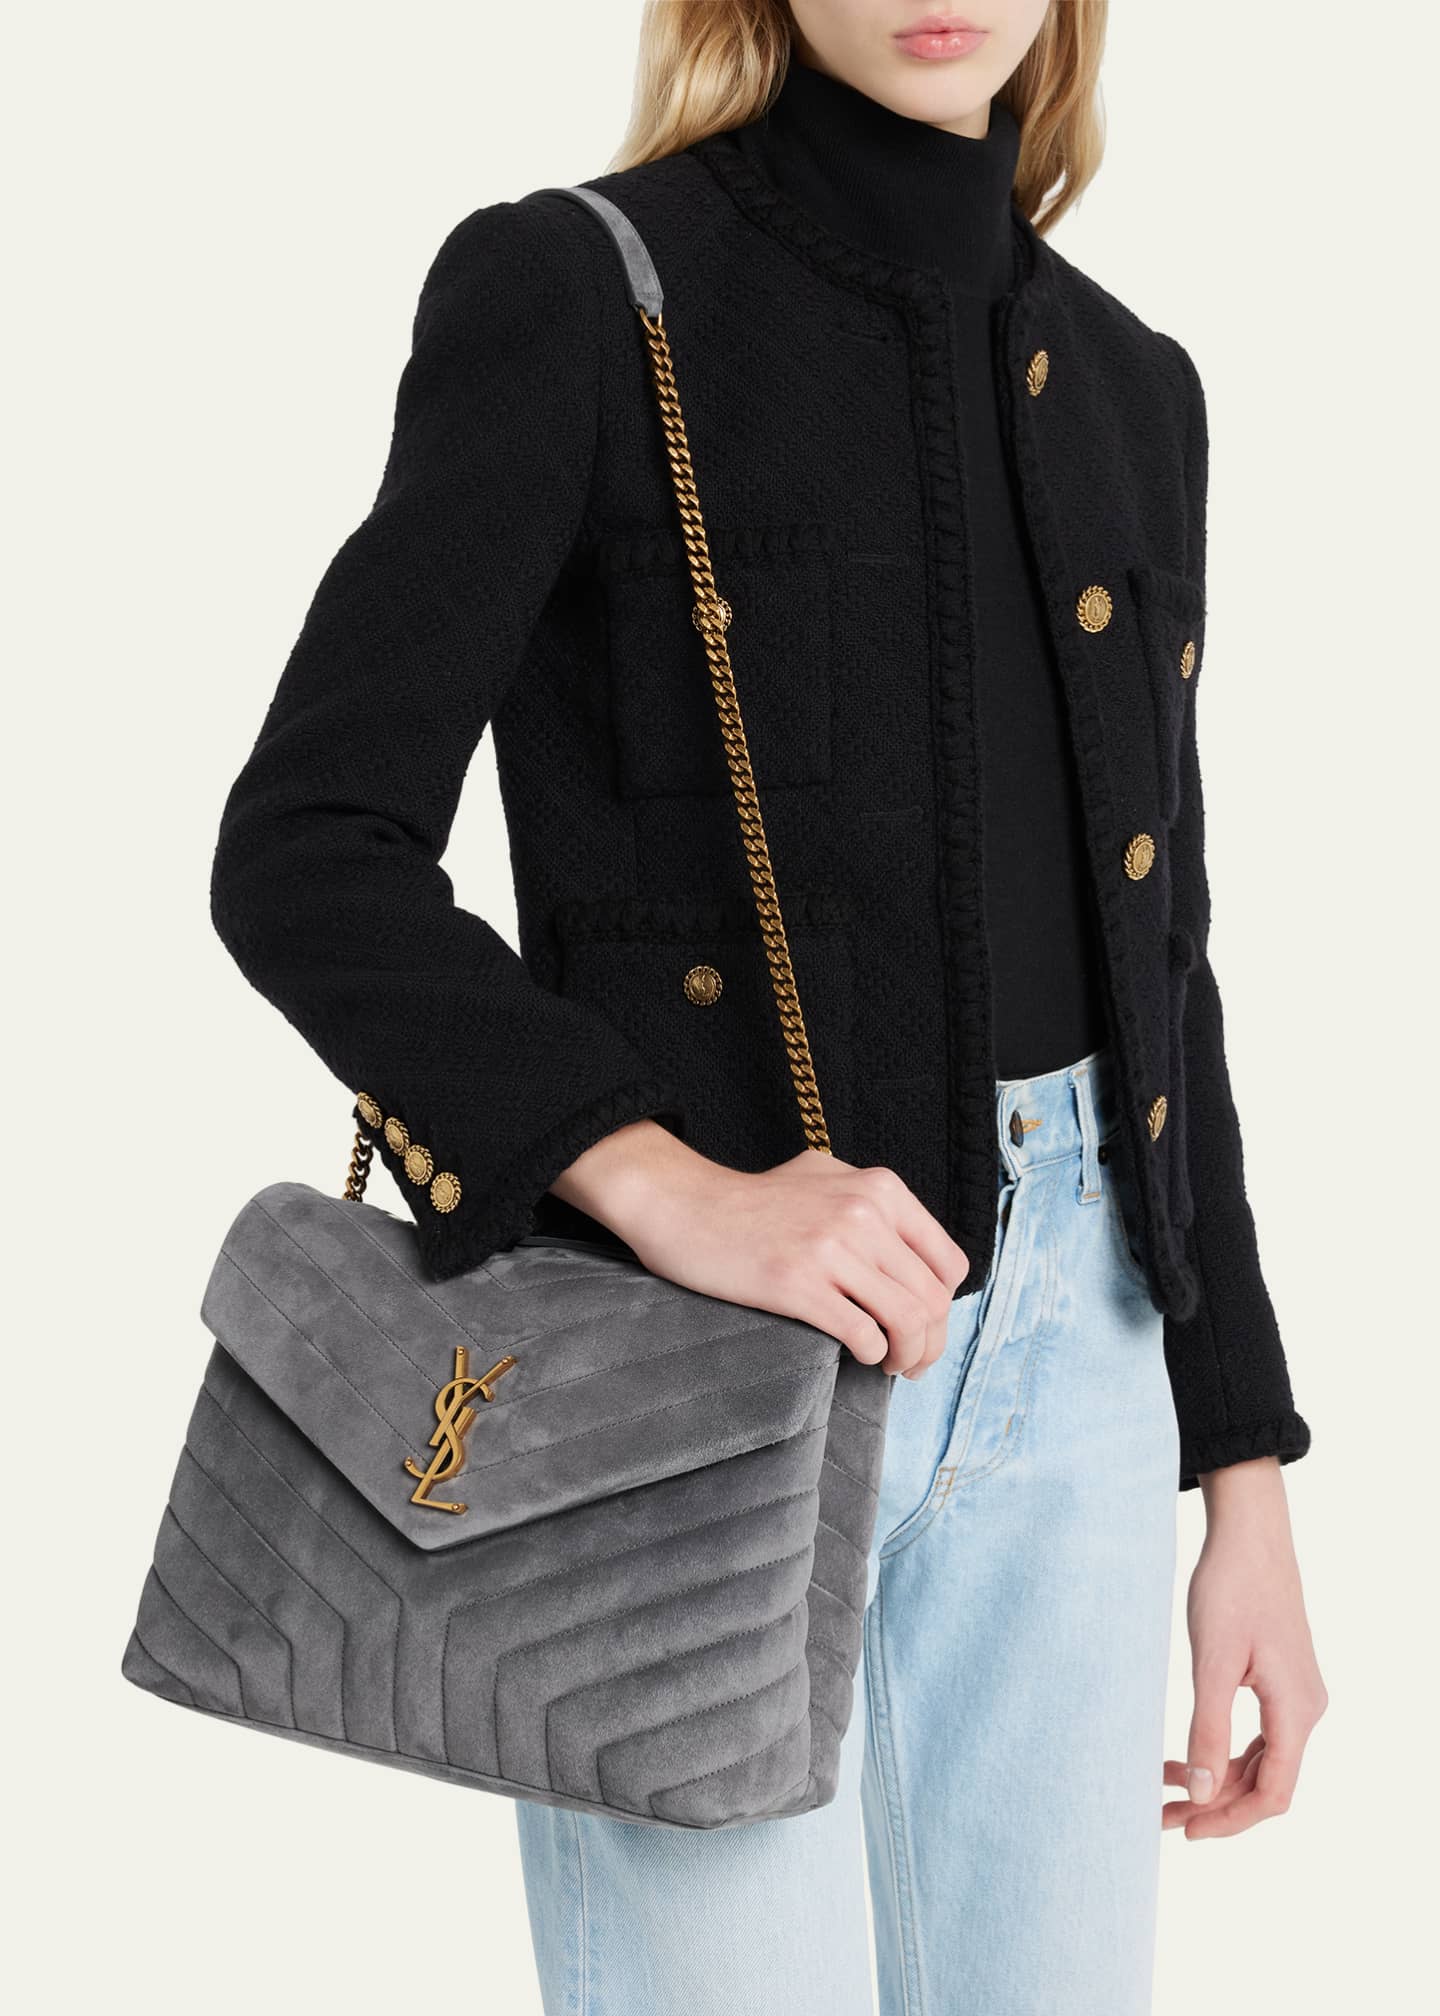 Loulou Small Suede Shoulder Bag in Black - Saint Laurent